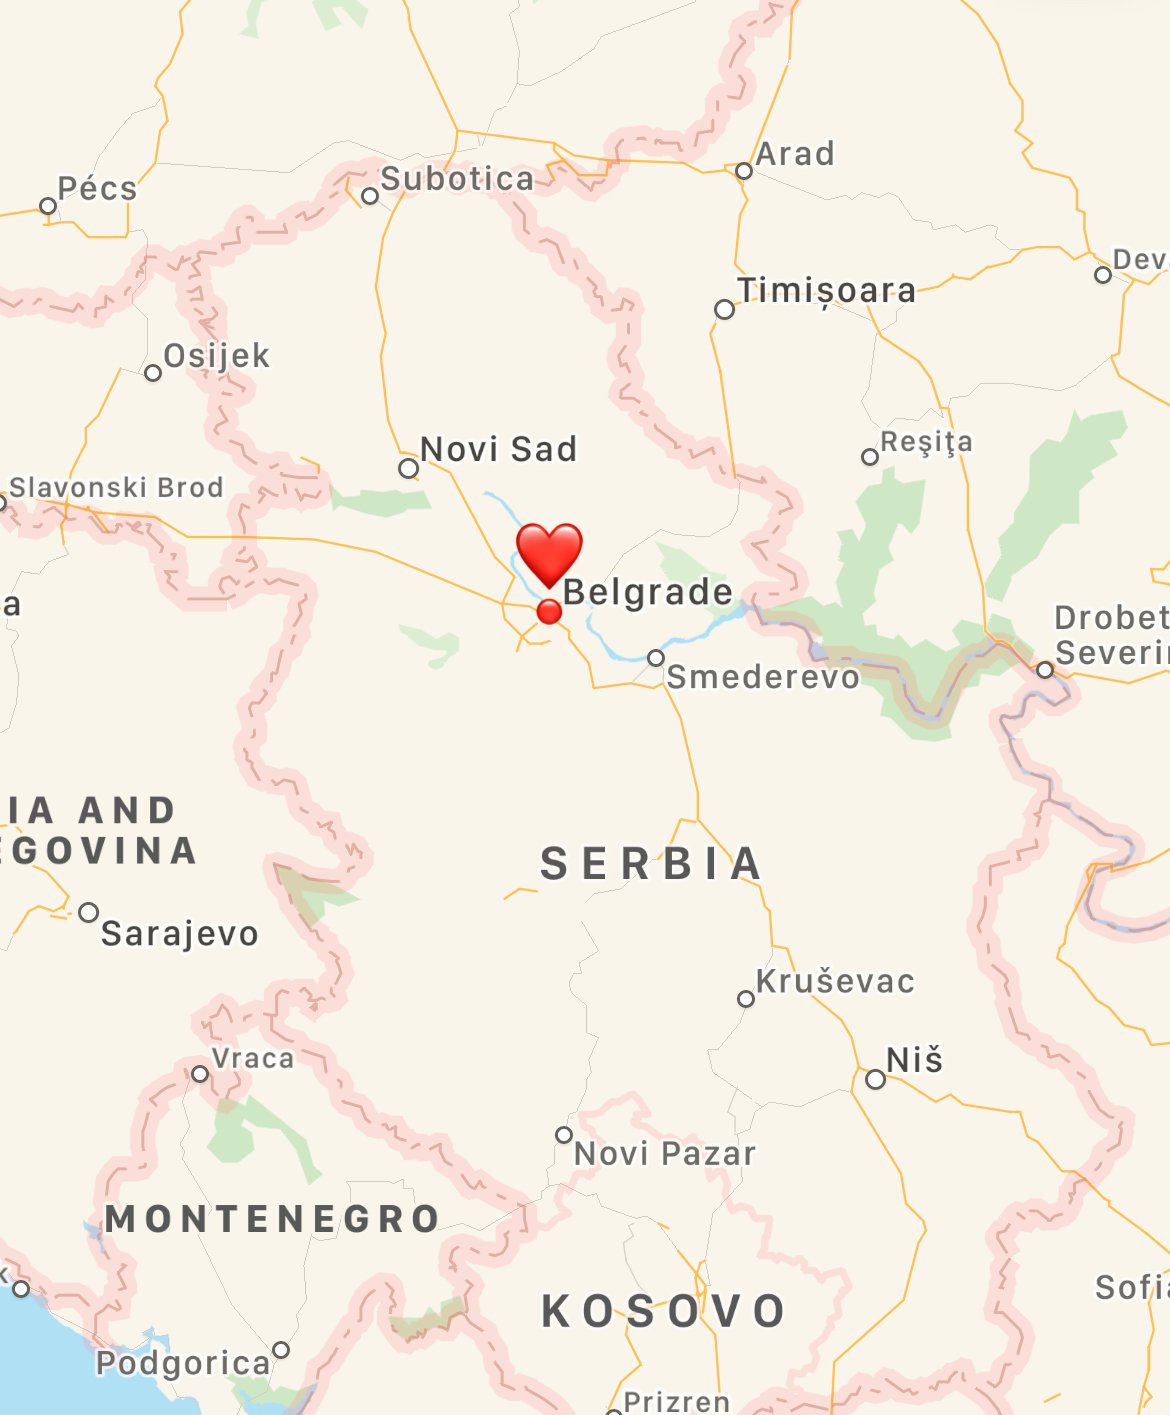 Where is Belgrade